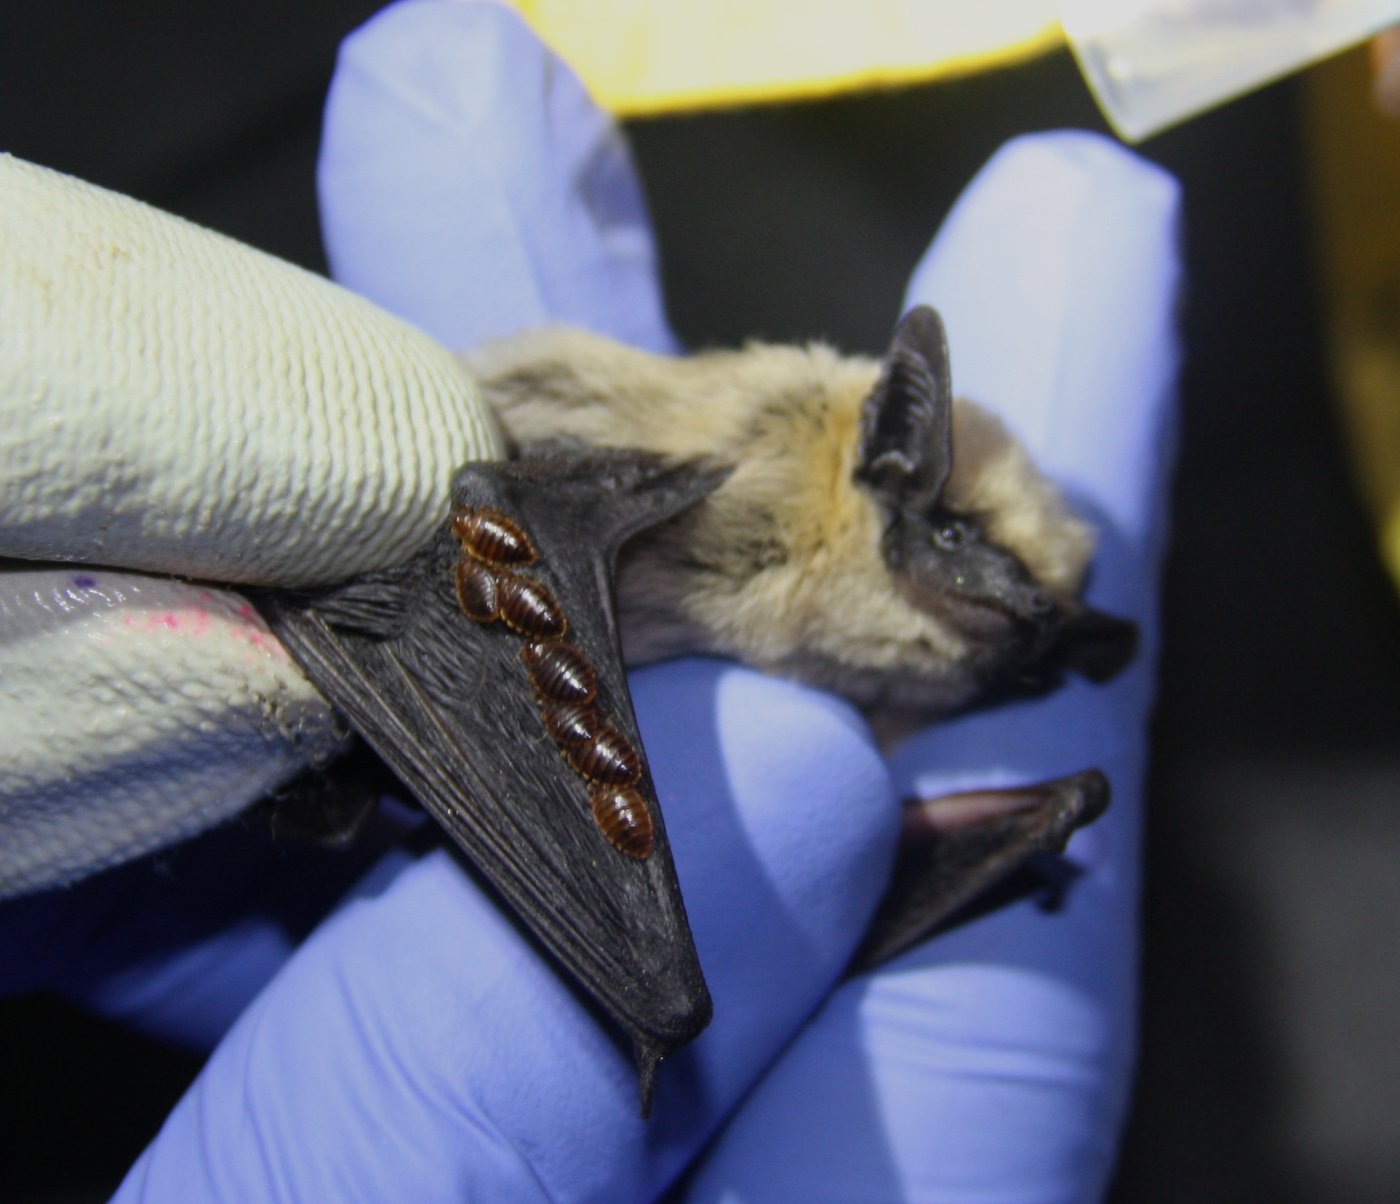 Phd bat research